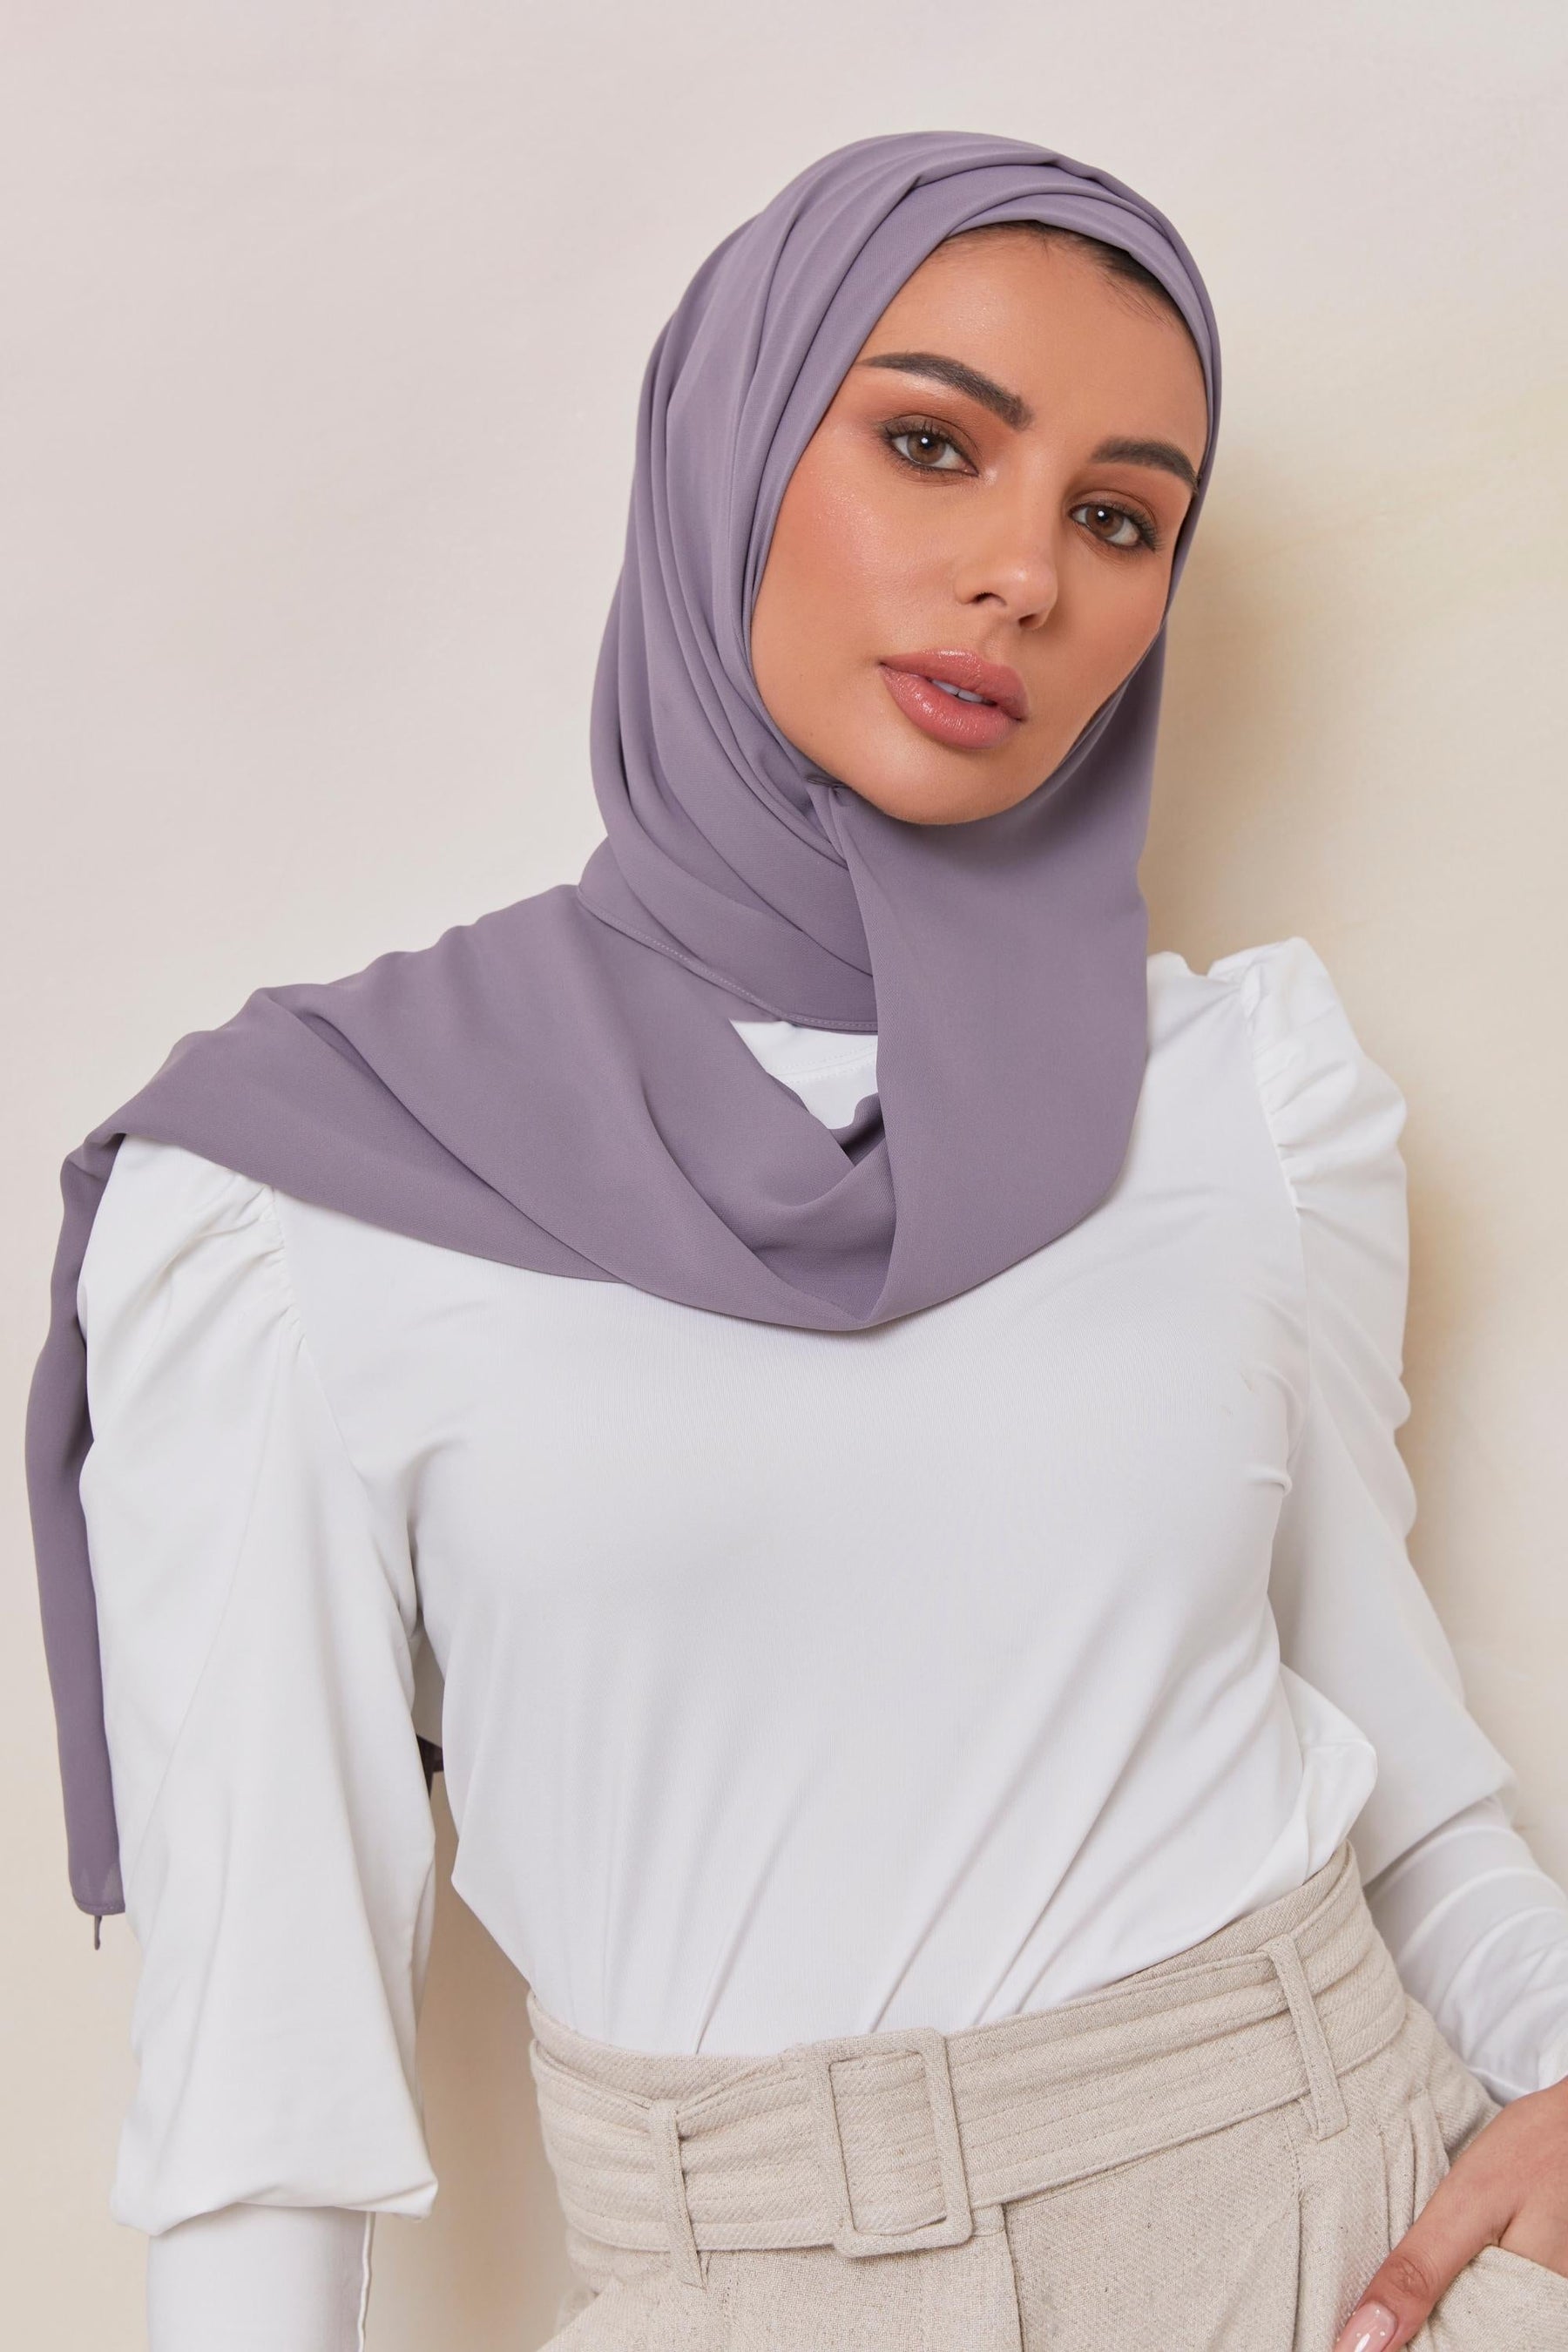 Premium Chiffon Hijab - Chicago epschoolboard 